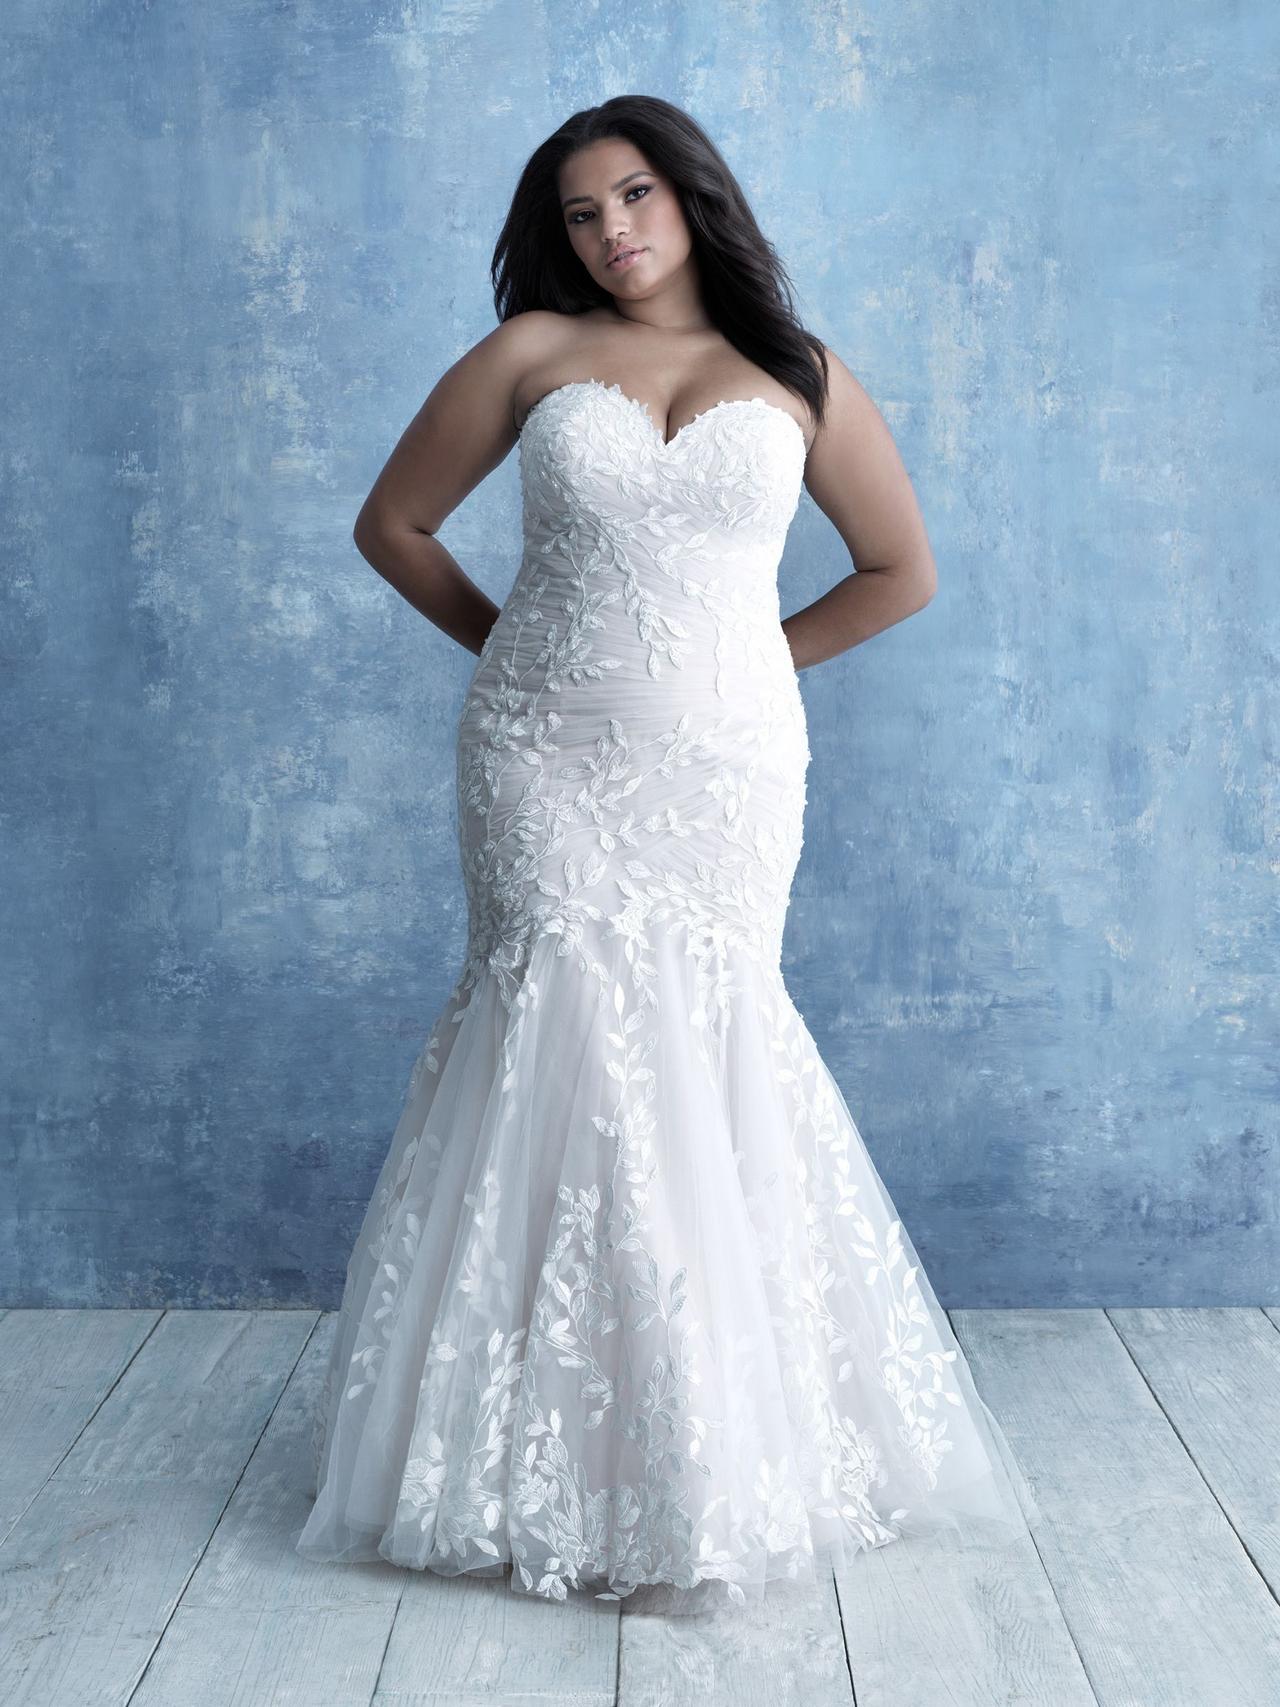 Fitted / Fishtail Wedding Dresses - La fleur bridal